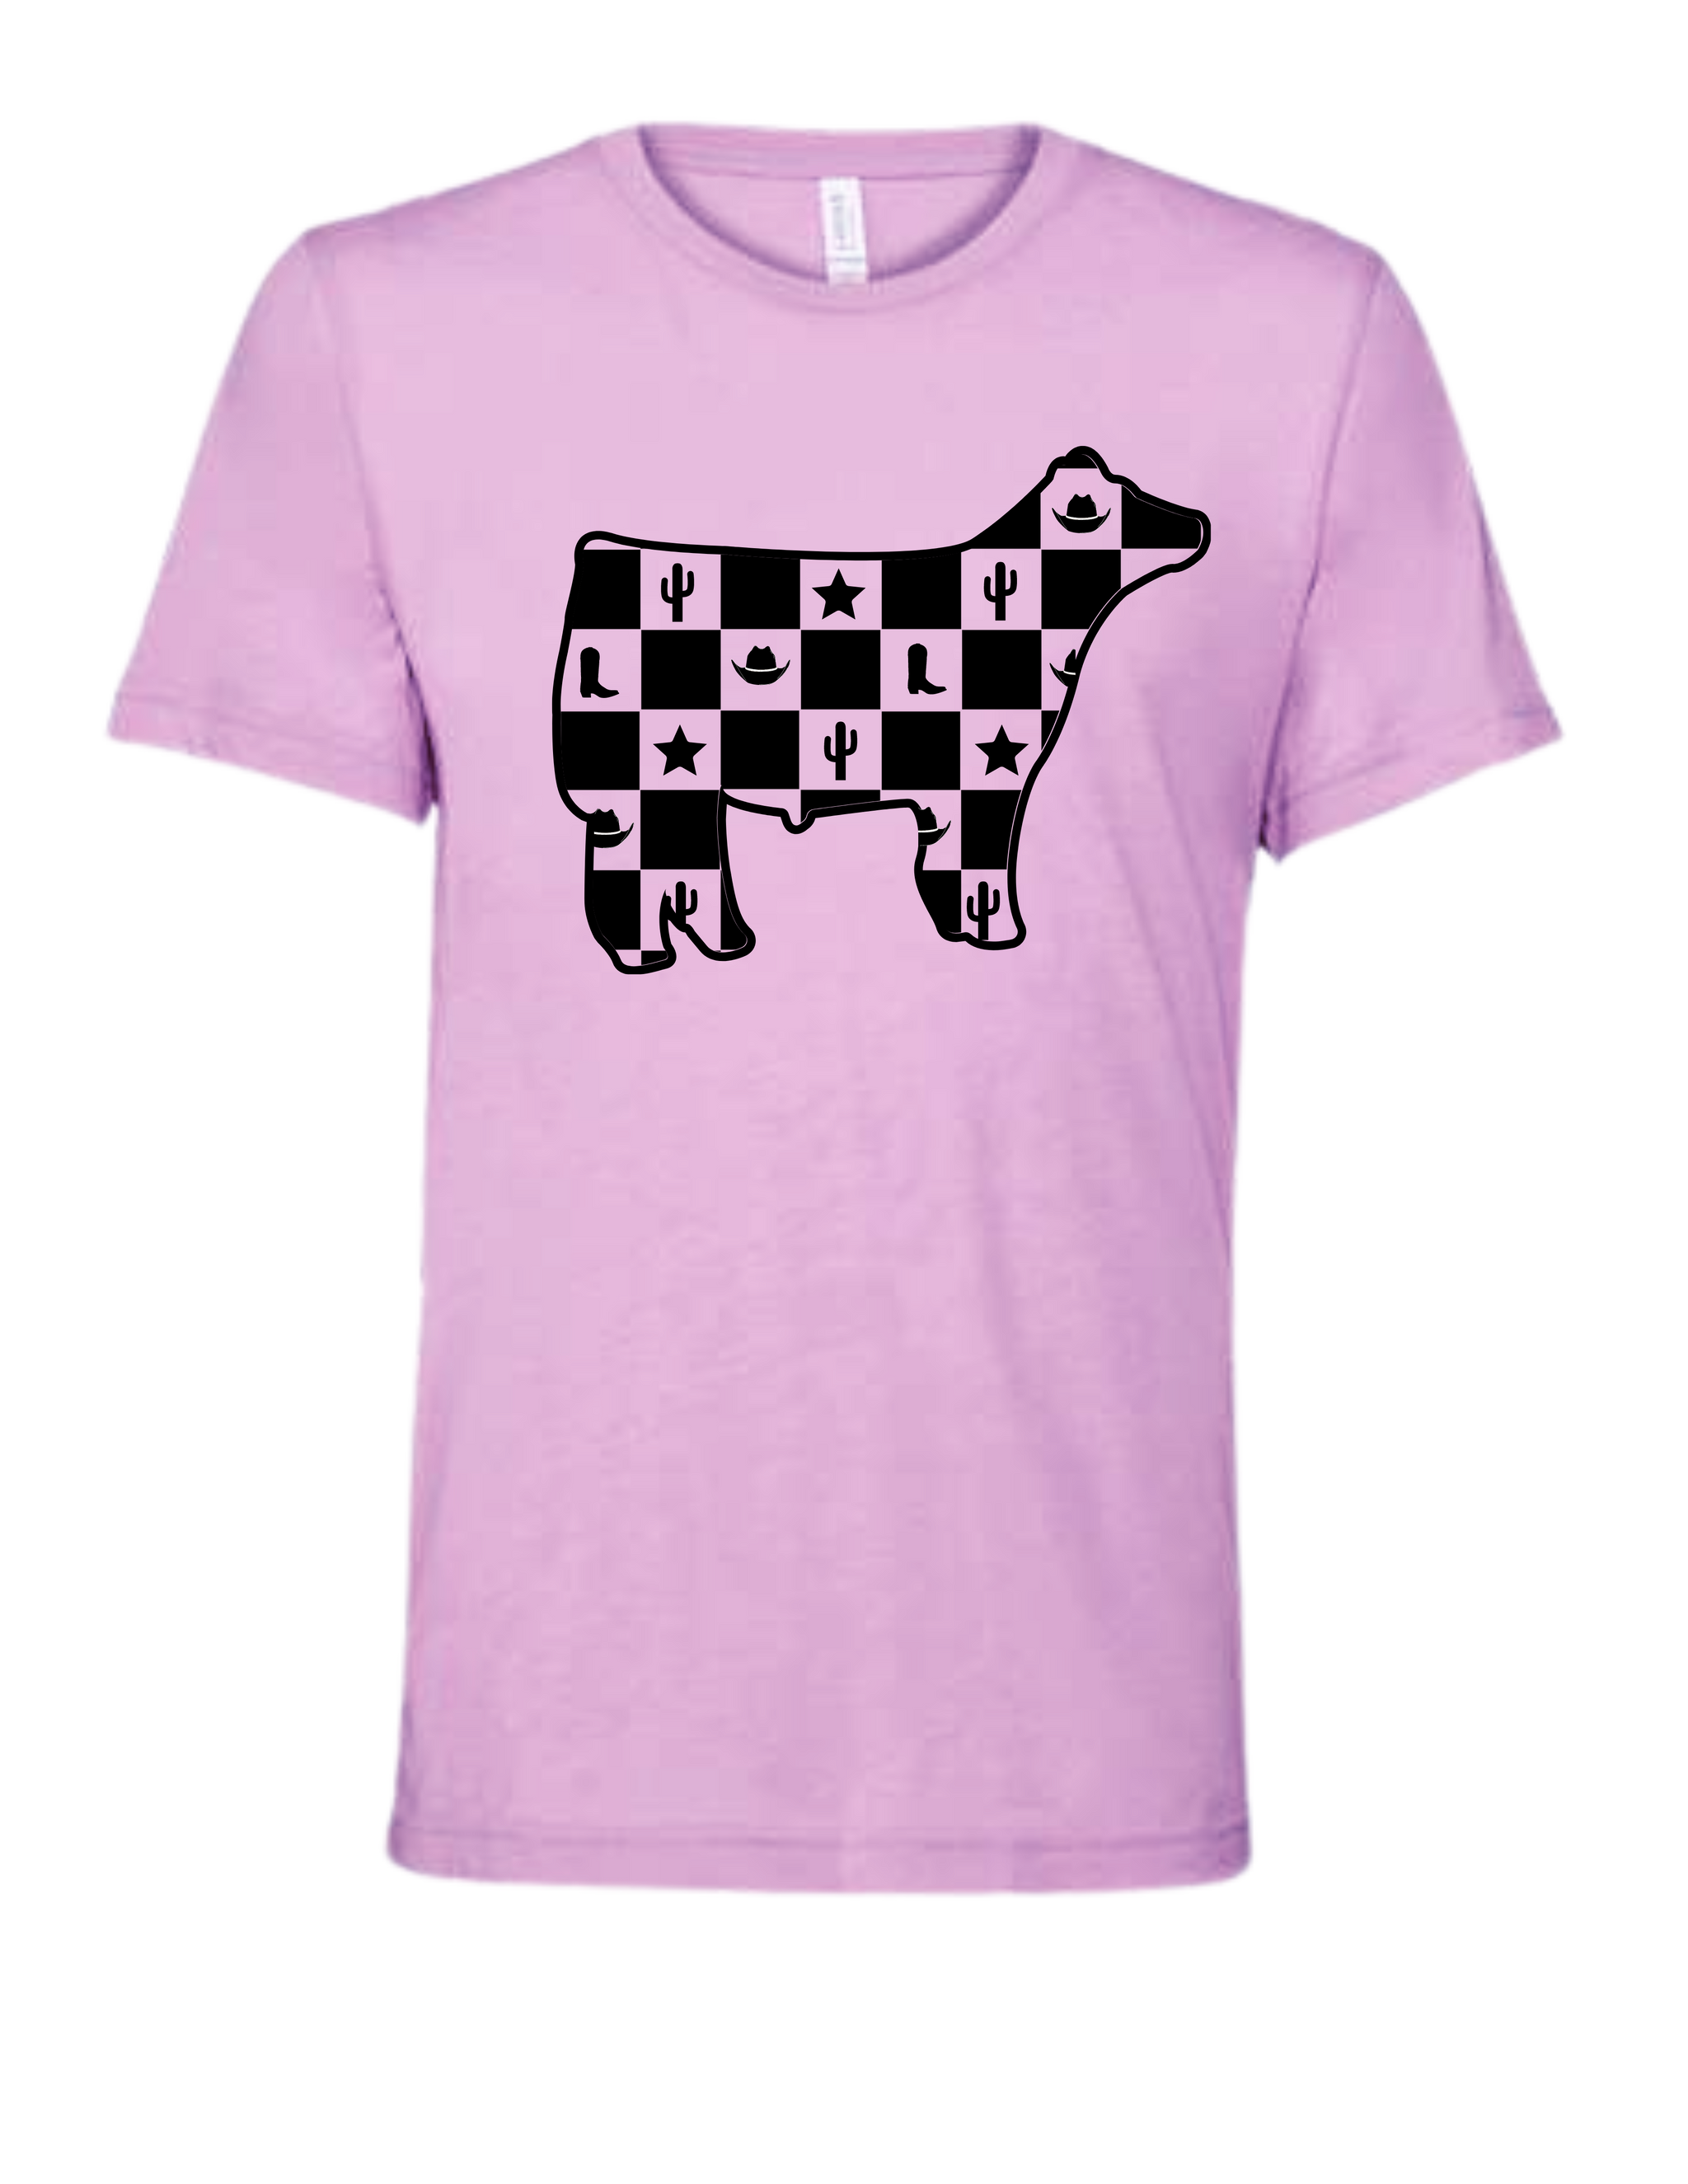 Checkered Cow Short Sleeve Shirt in Light Purple